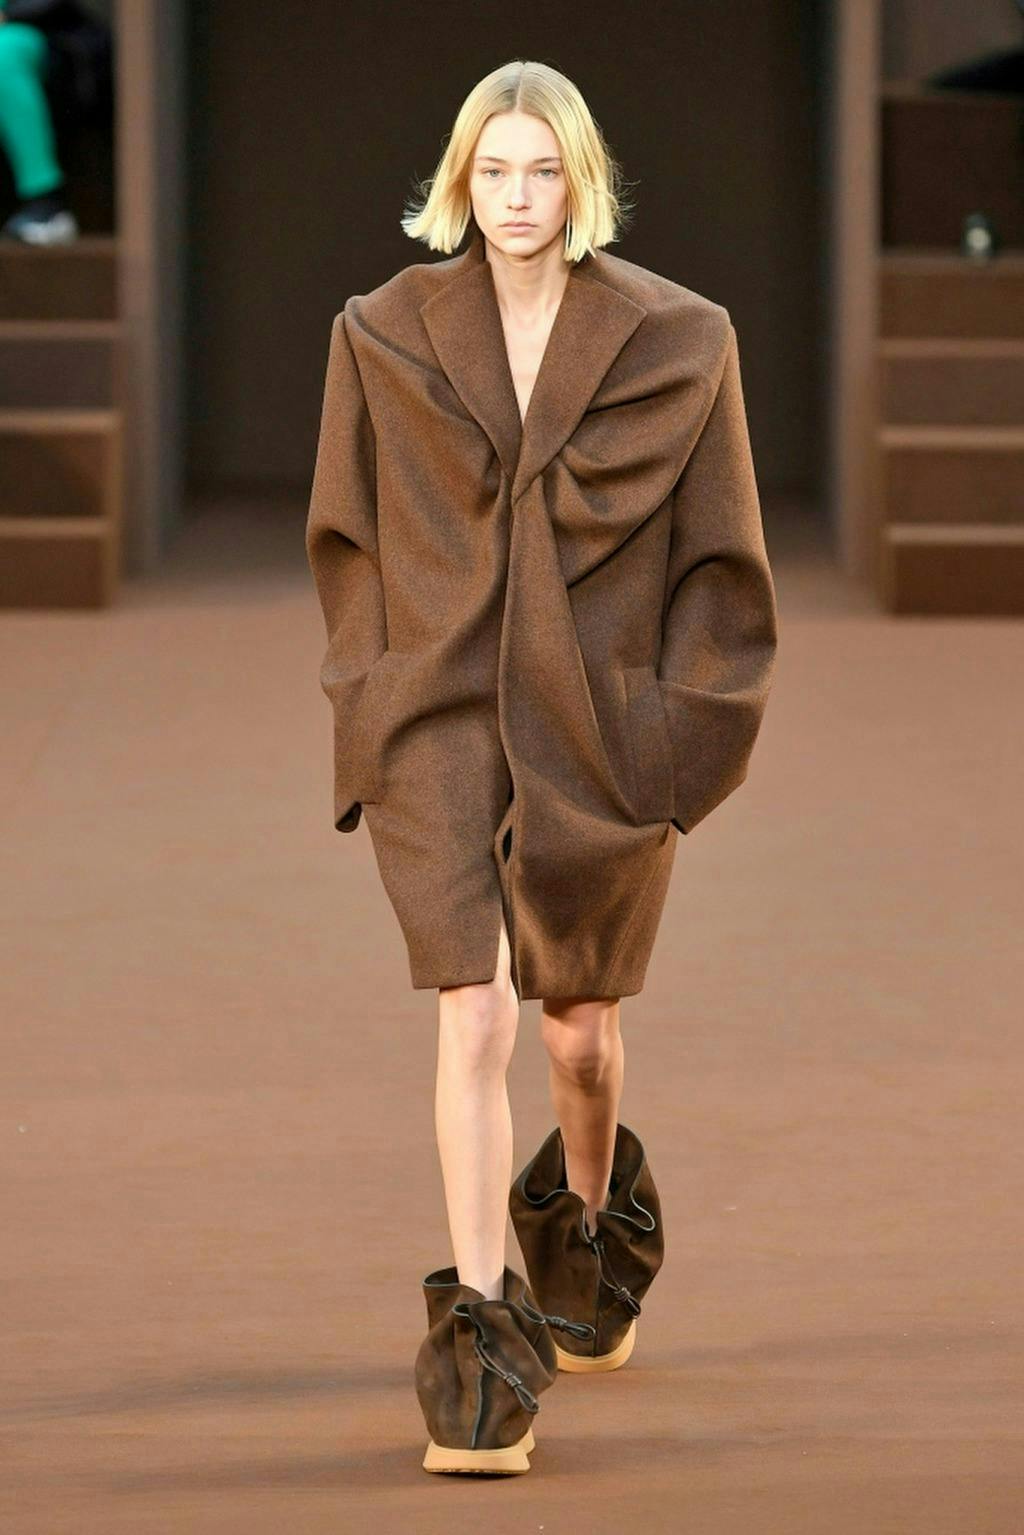 clothing apparel coat overcoat person human shoe footwear